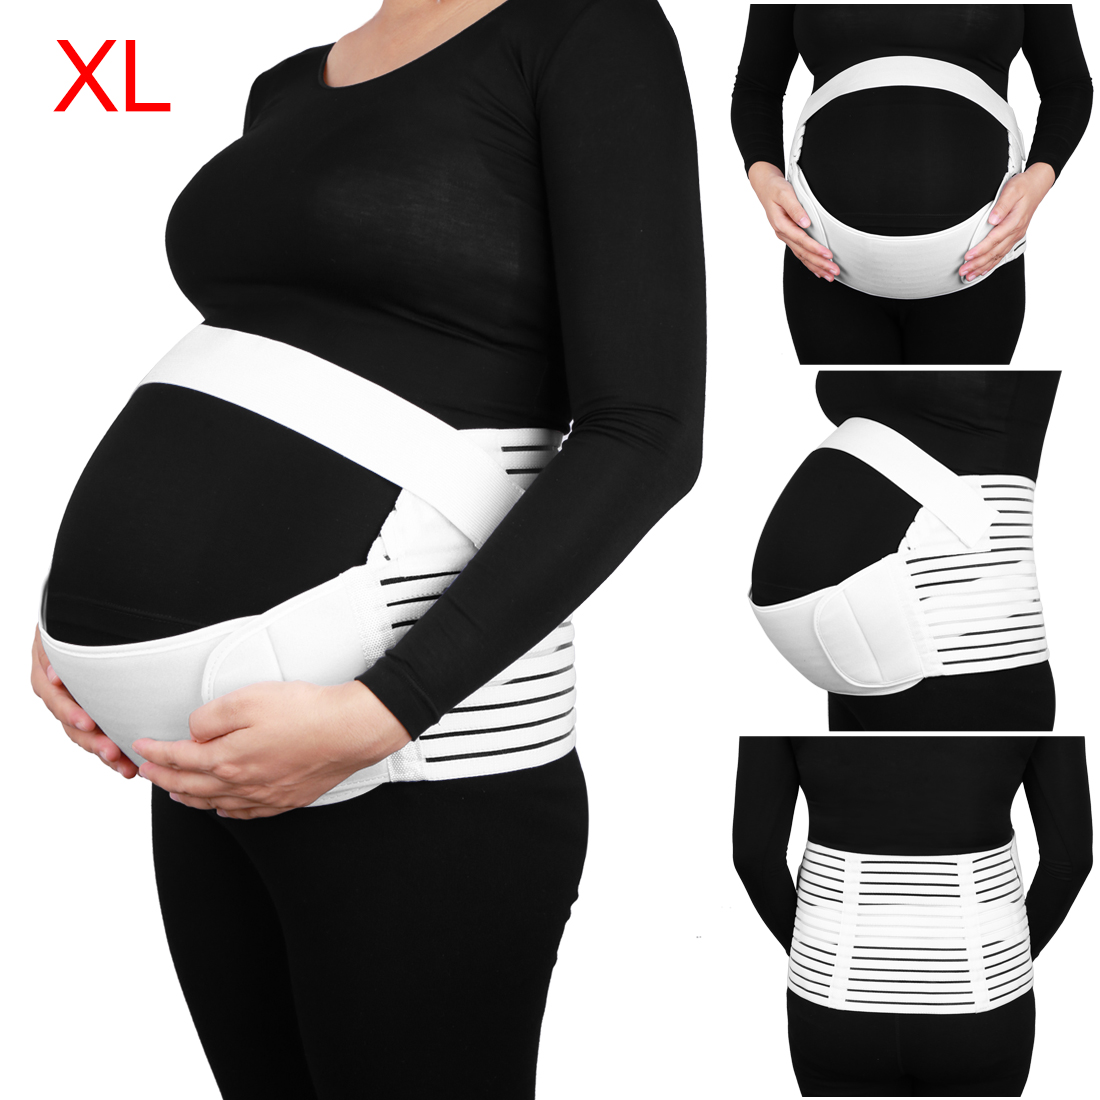 Unique Bargains Tasharina M/L/XL Pregnancy Maternity Support Belt Waist Abdomen Belly Back Brace Band